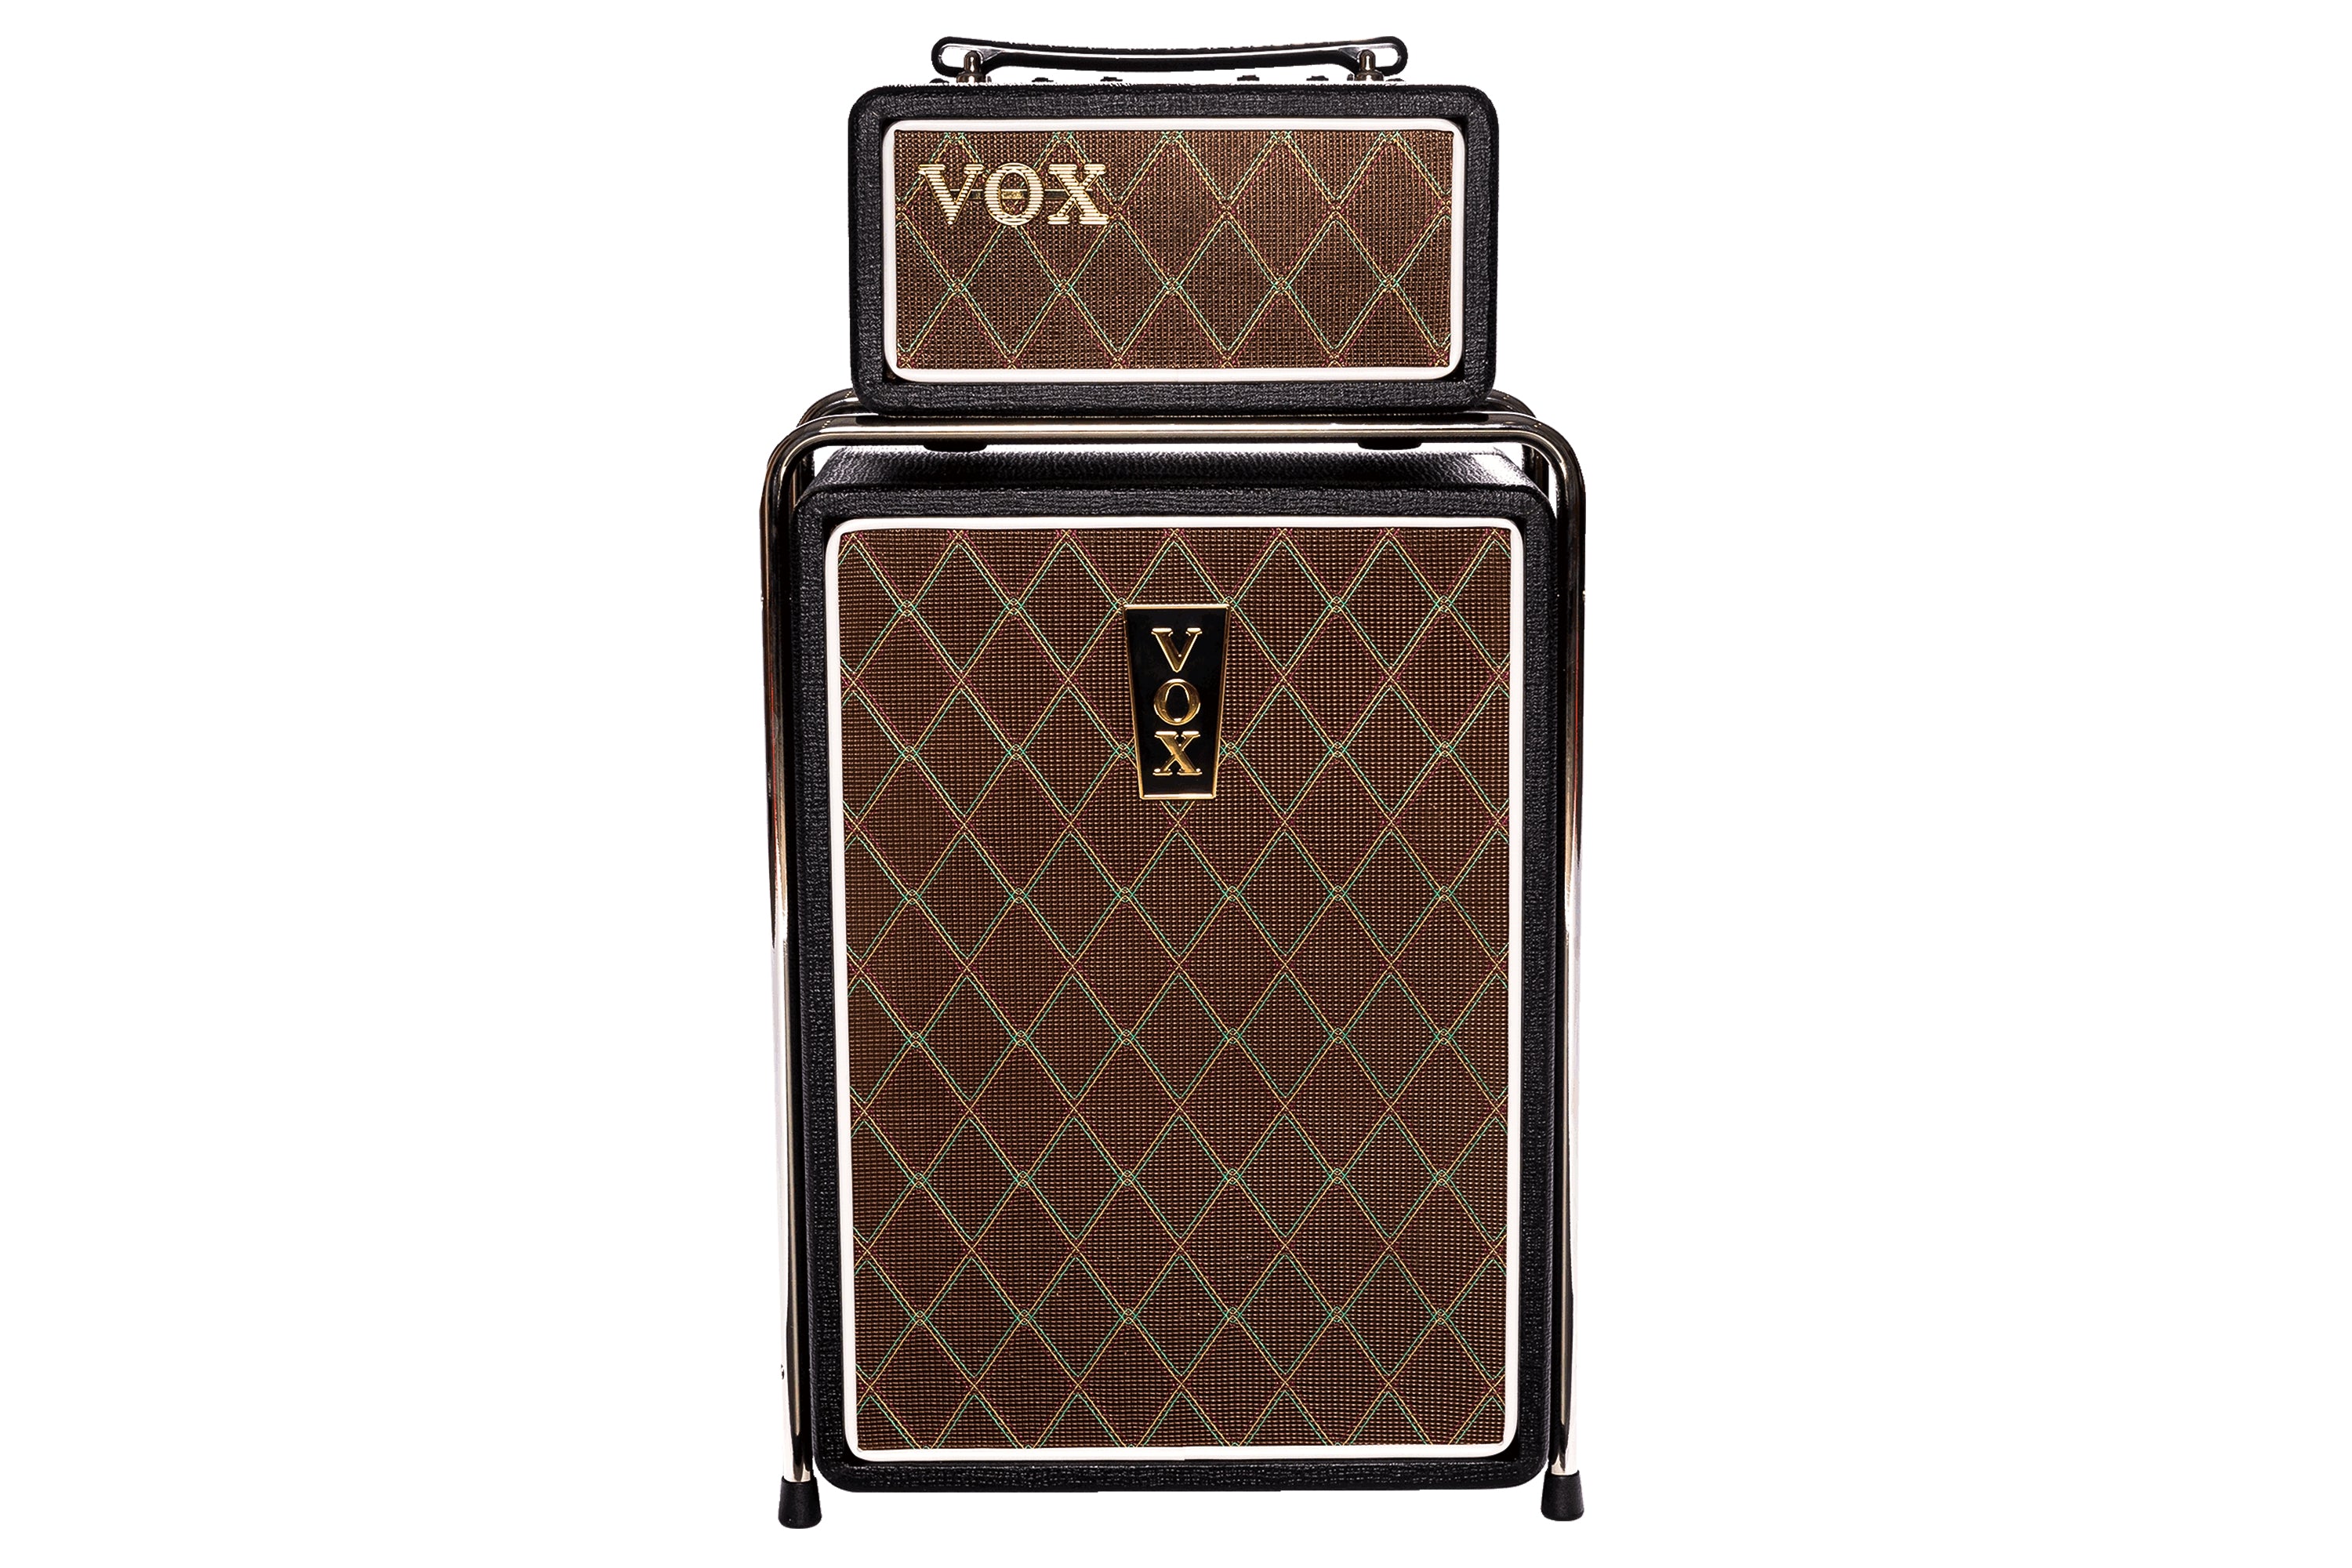 Vox Mini Superbeetle 50 Watt Guitar Amp